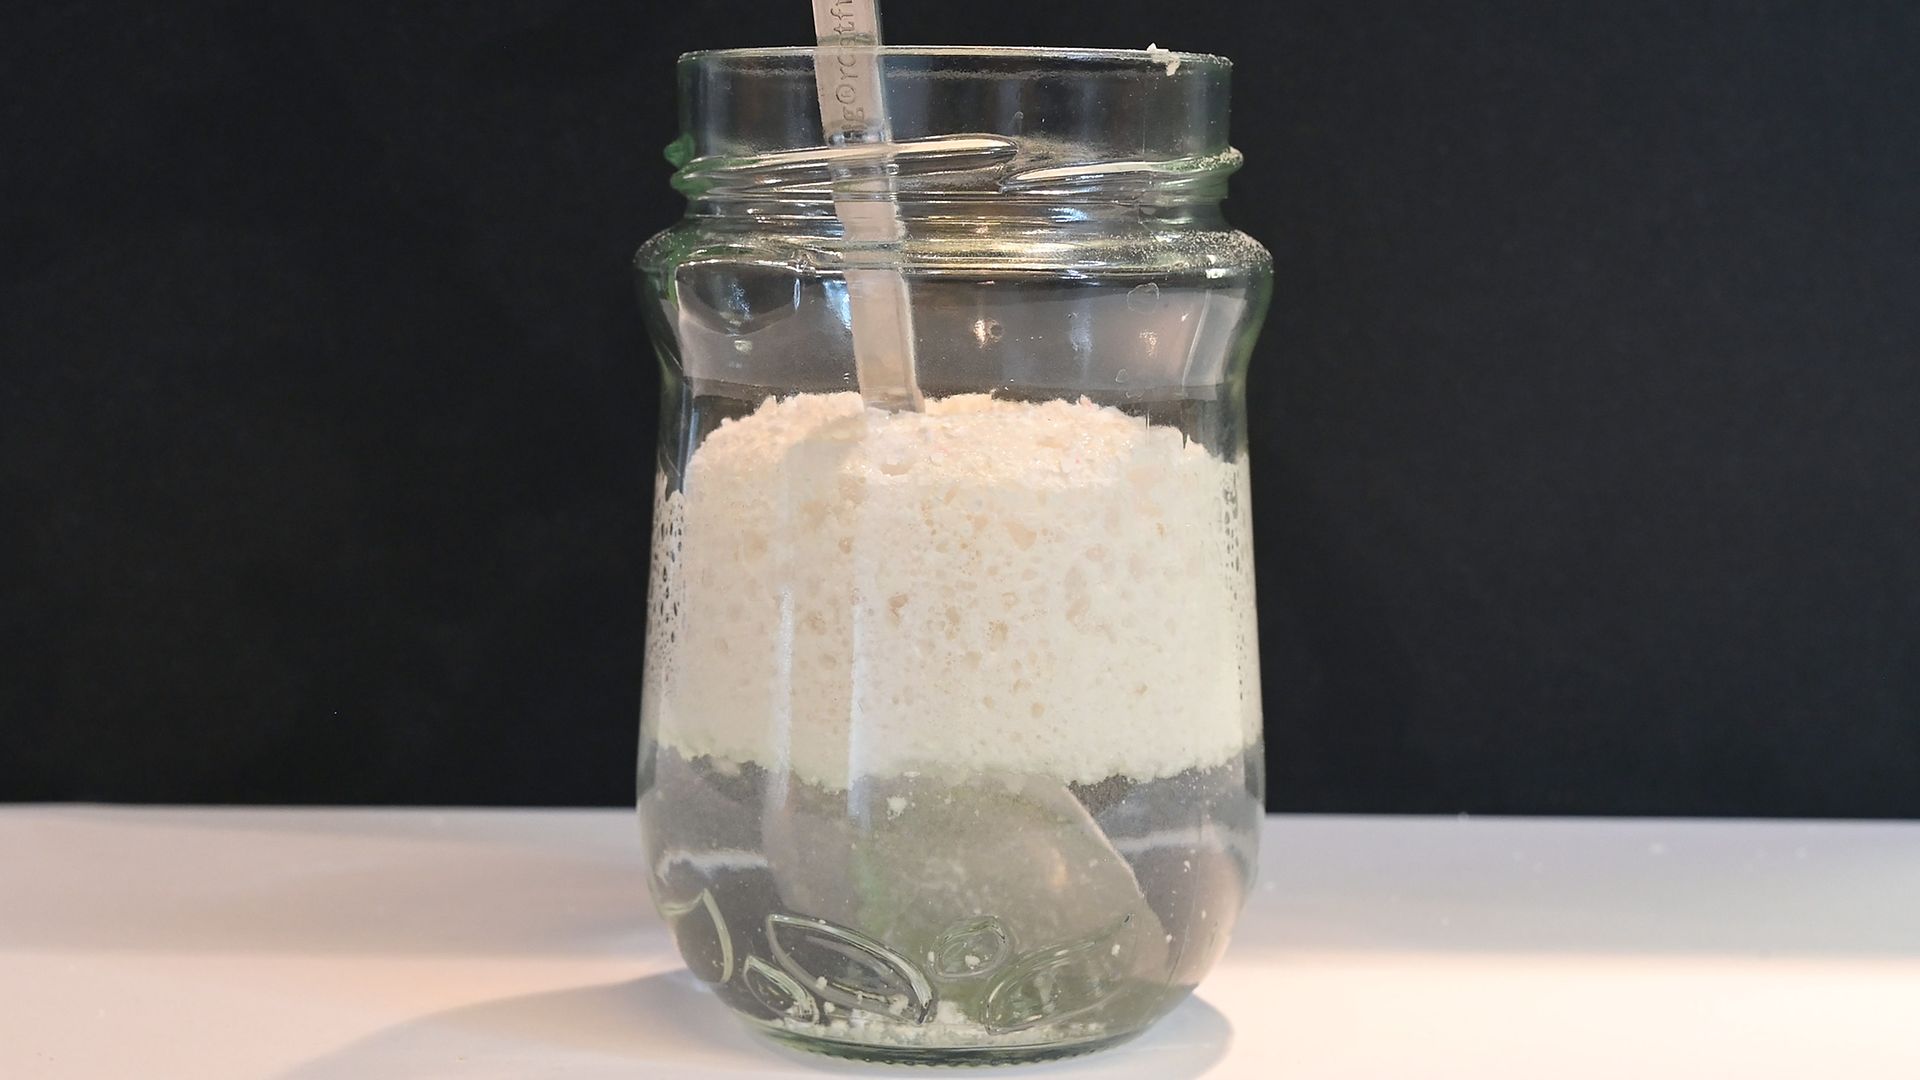 glass jar containing liquid and white foam